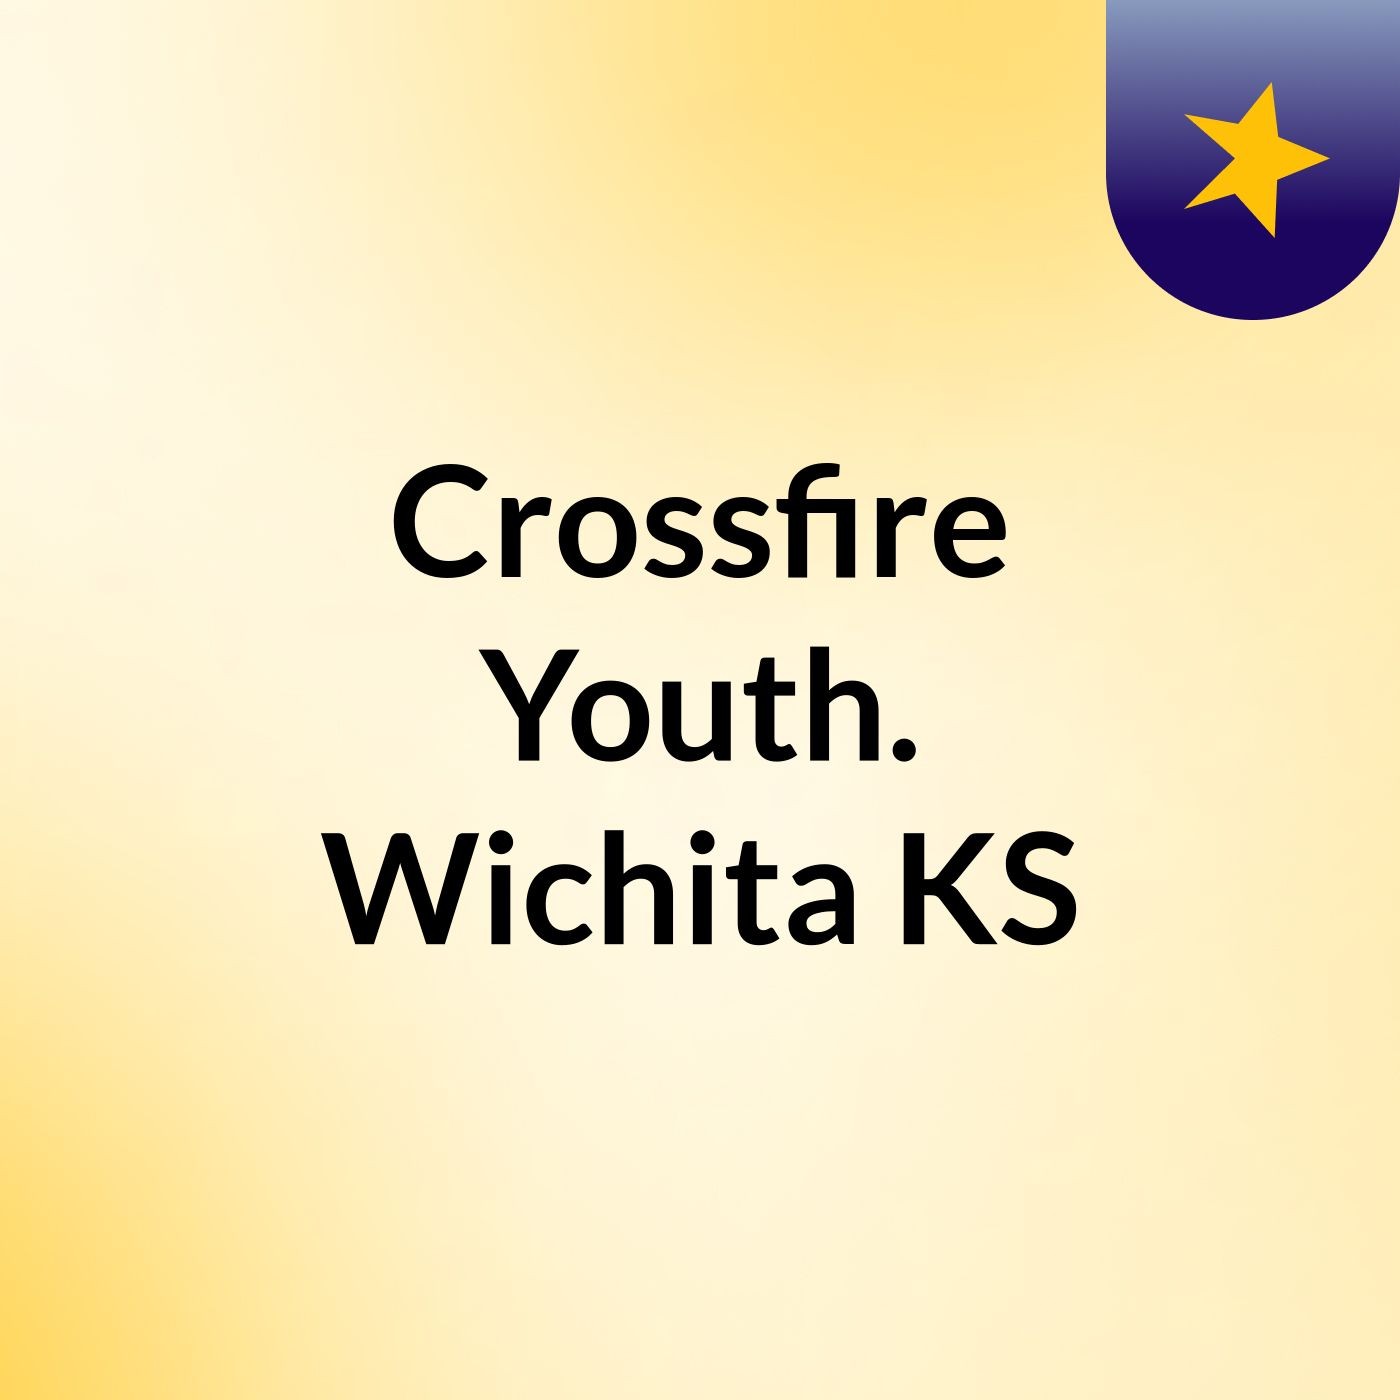 Crossfire Youth. Wichita,KS